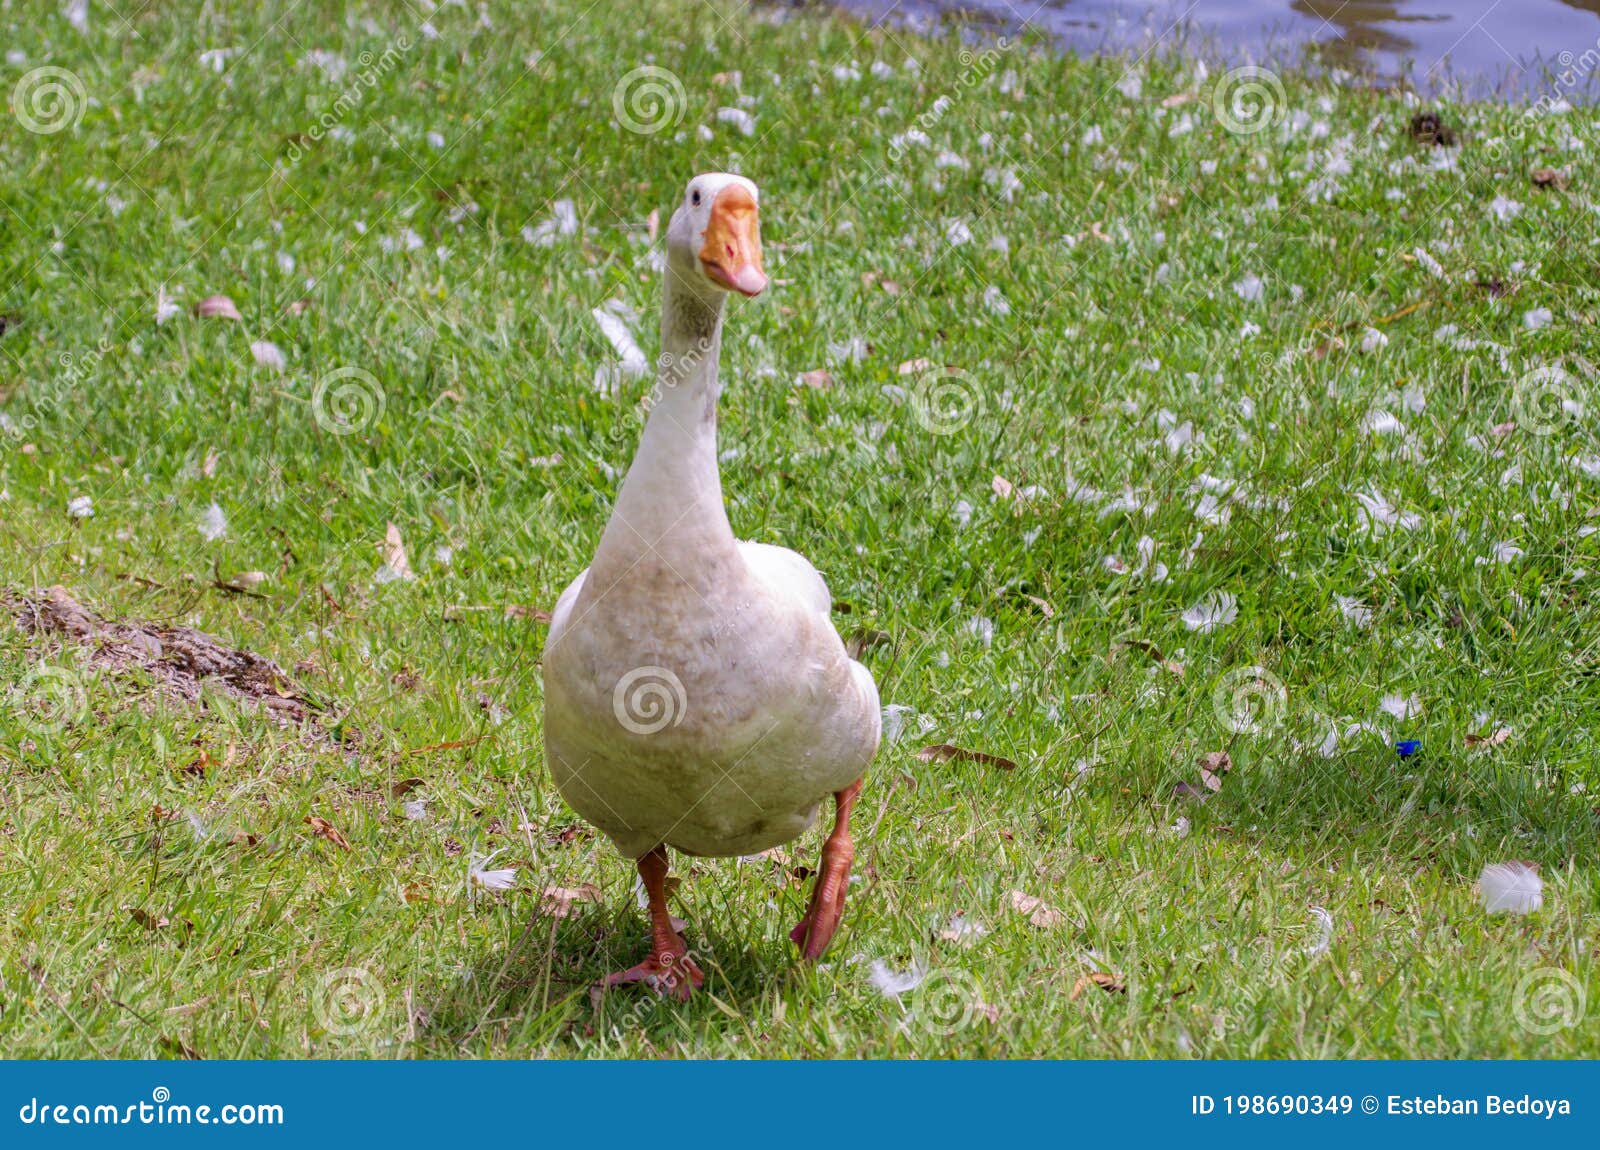 a curious duck